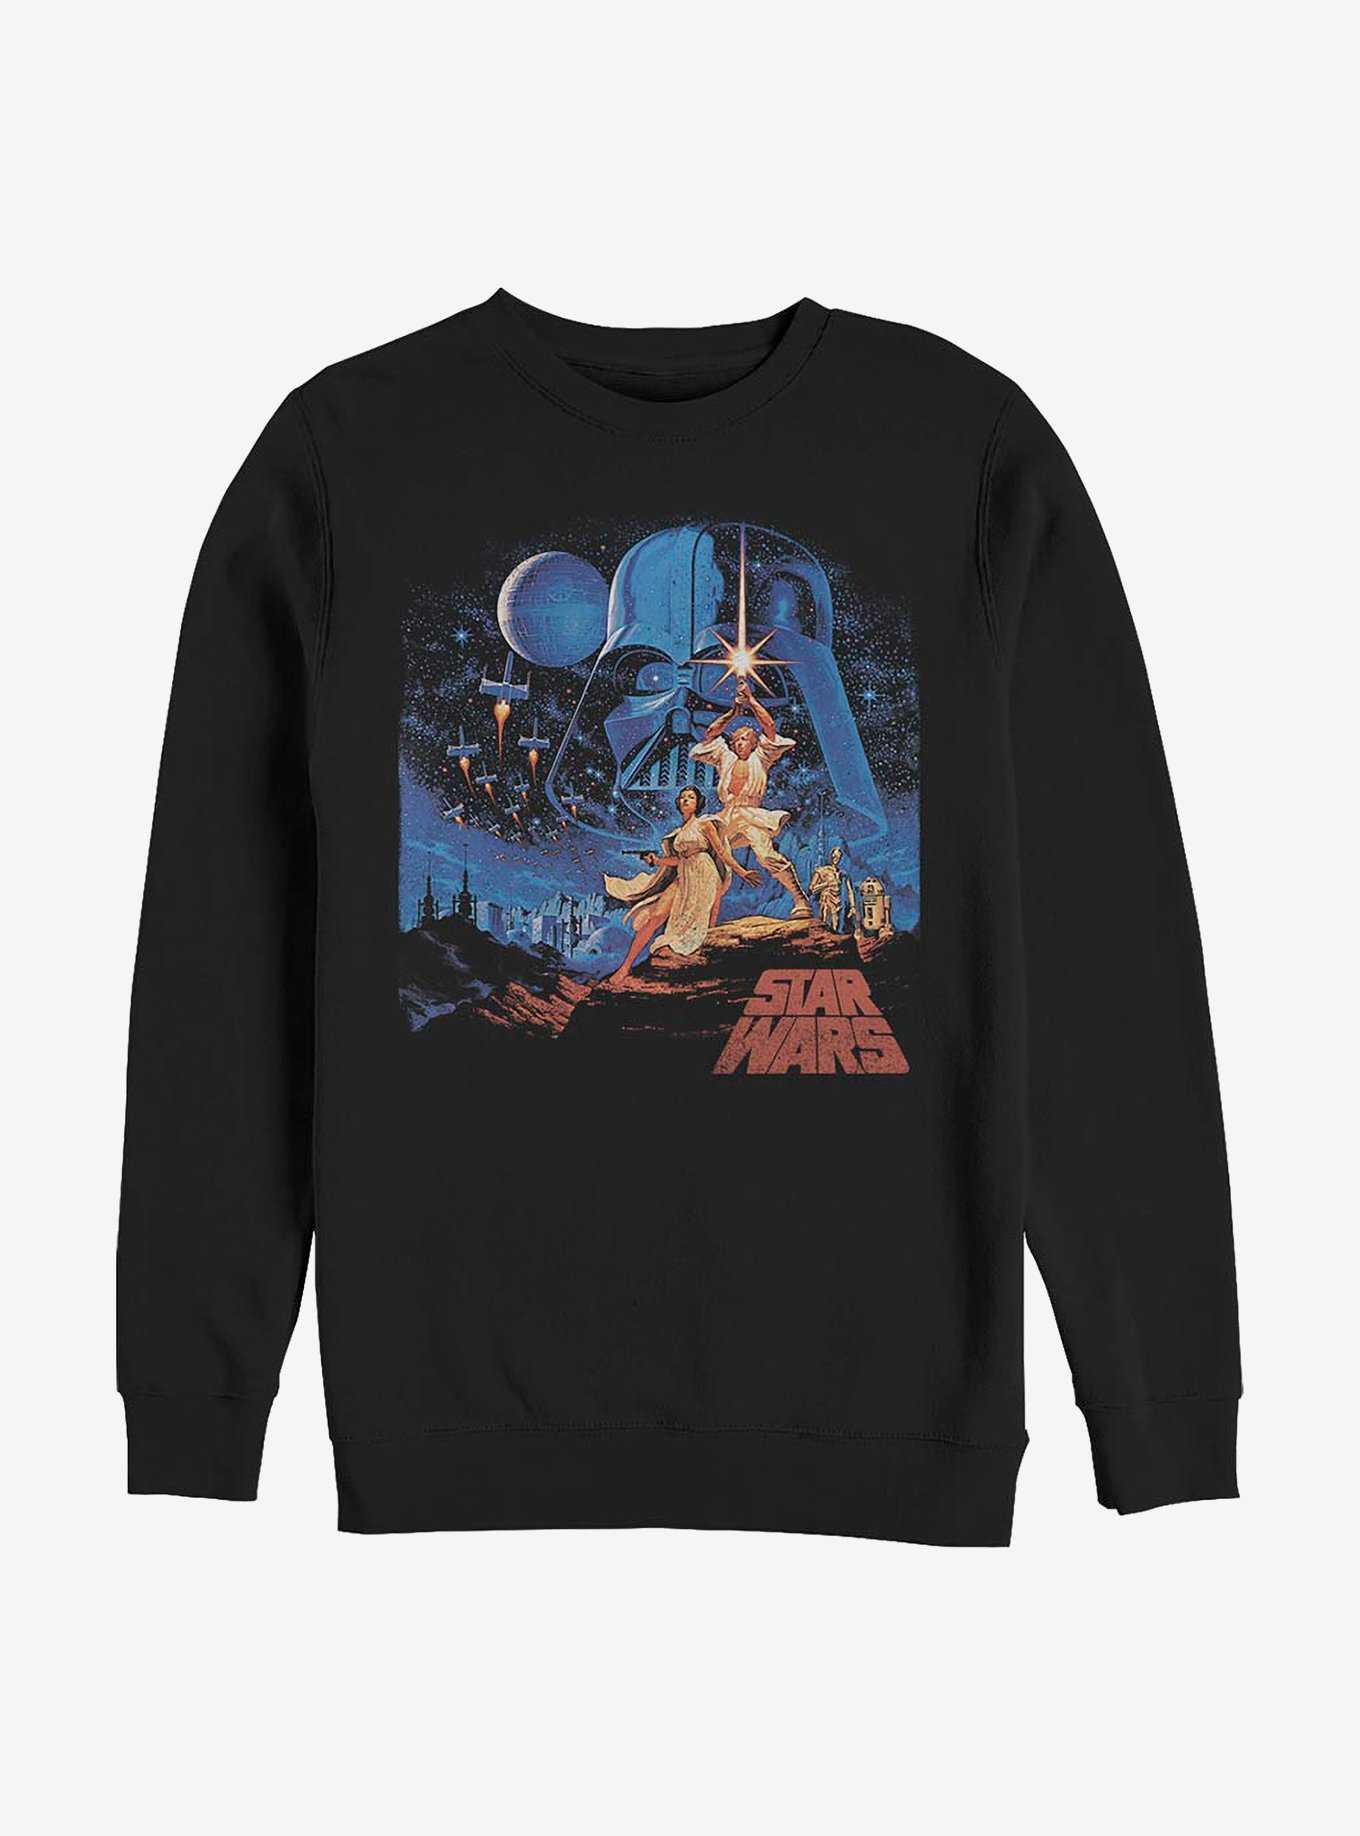 Star Wars All The Wars Crew Sweatshirt, , hi-res